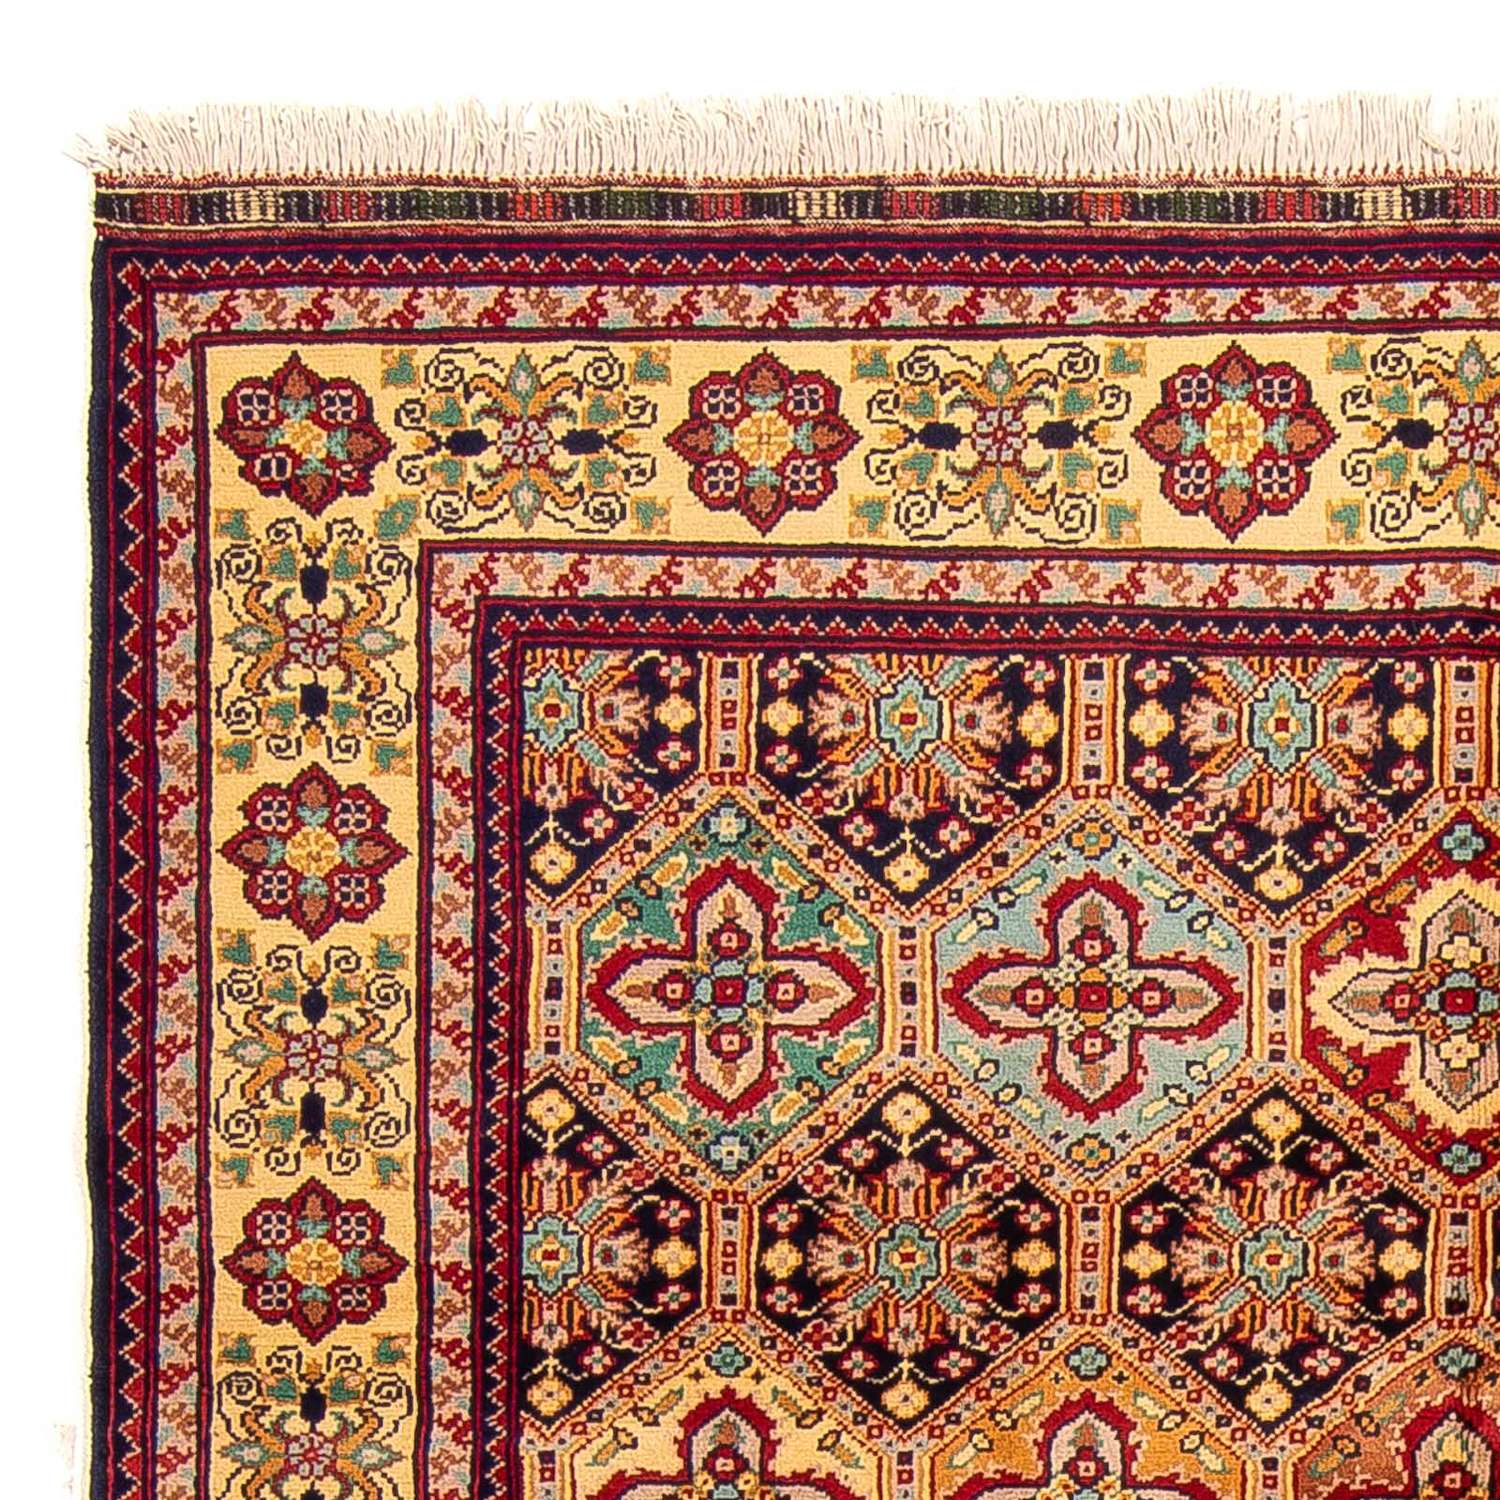 Afghan Rug - 199 x 153 cm - multicolored